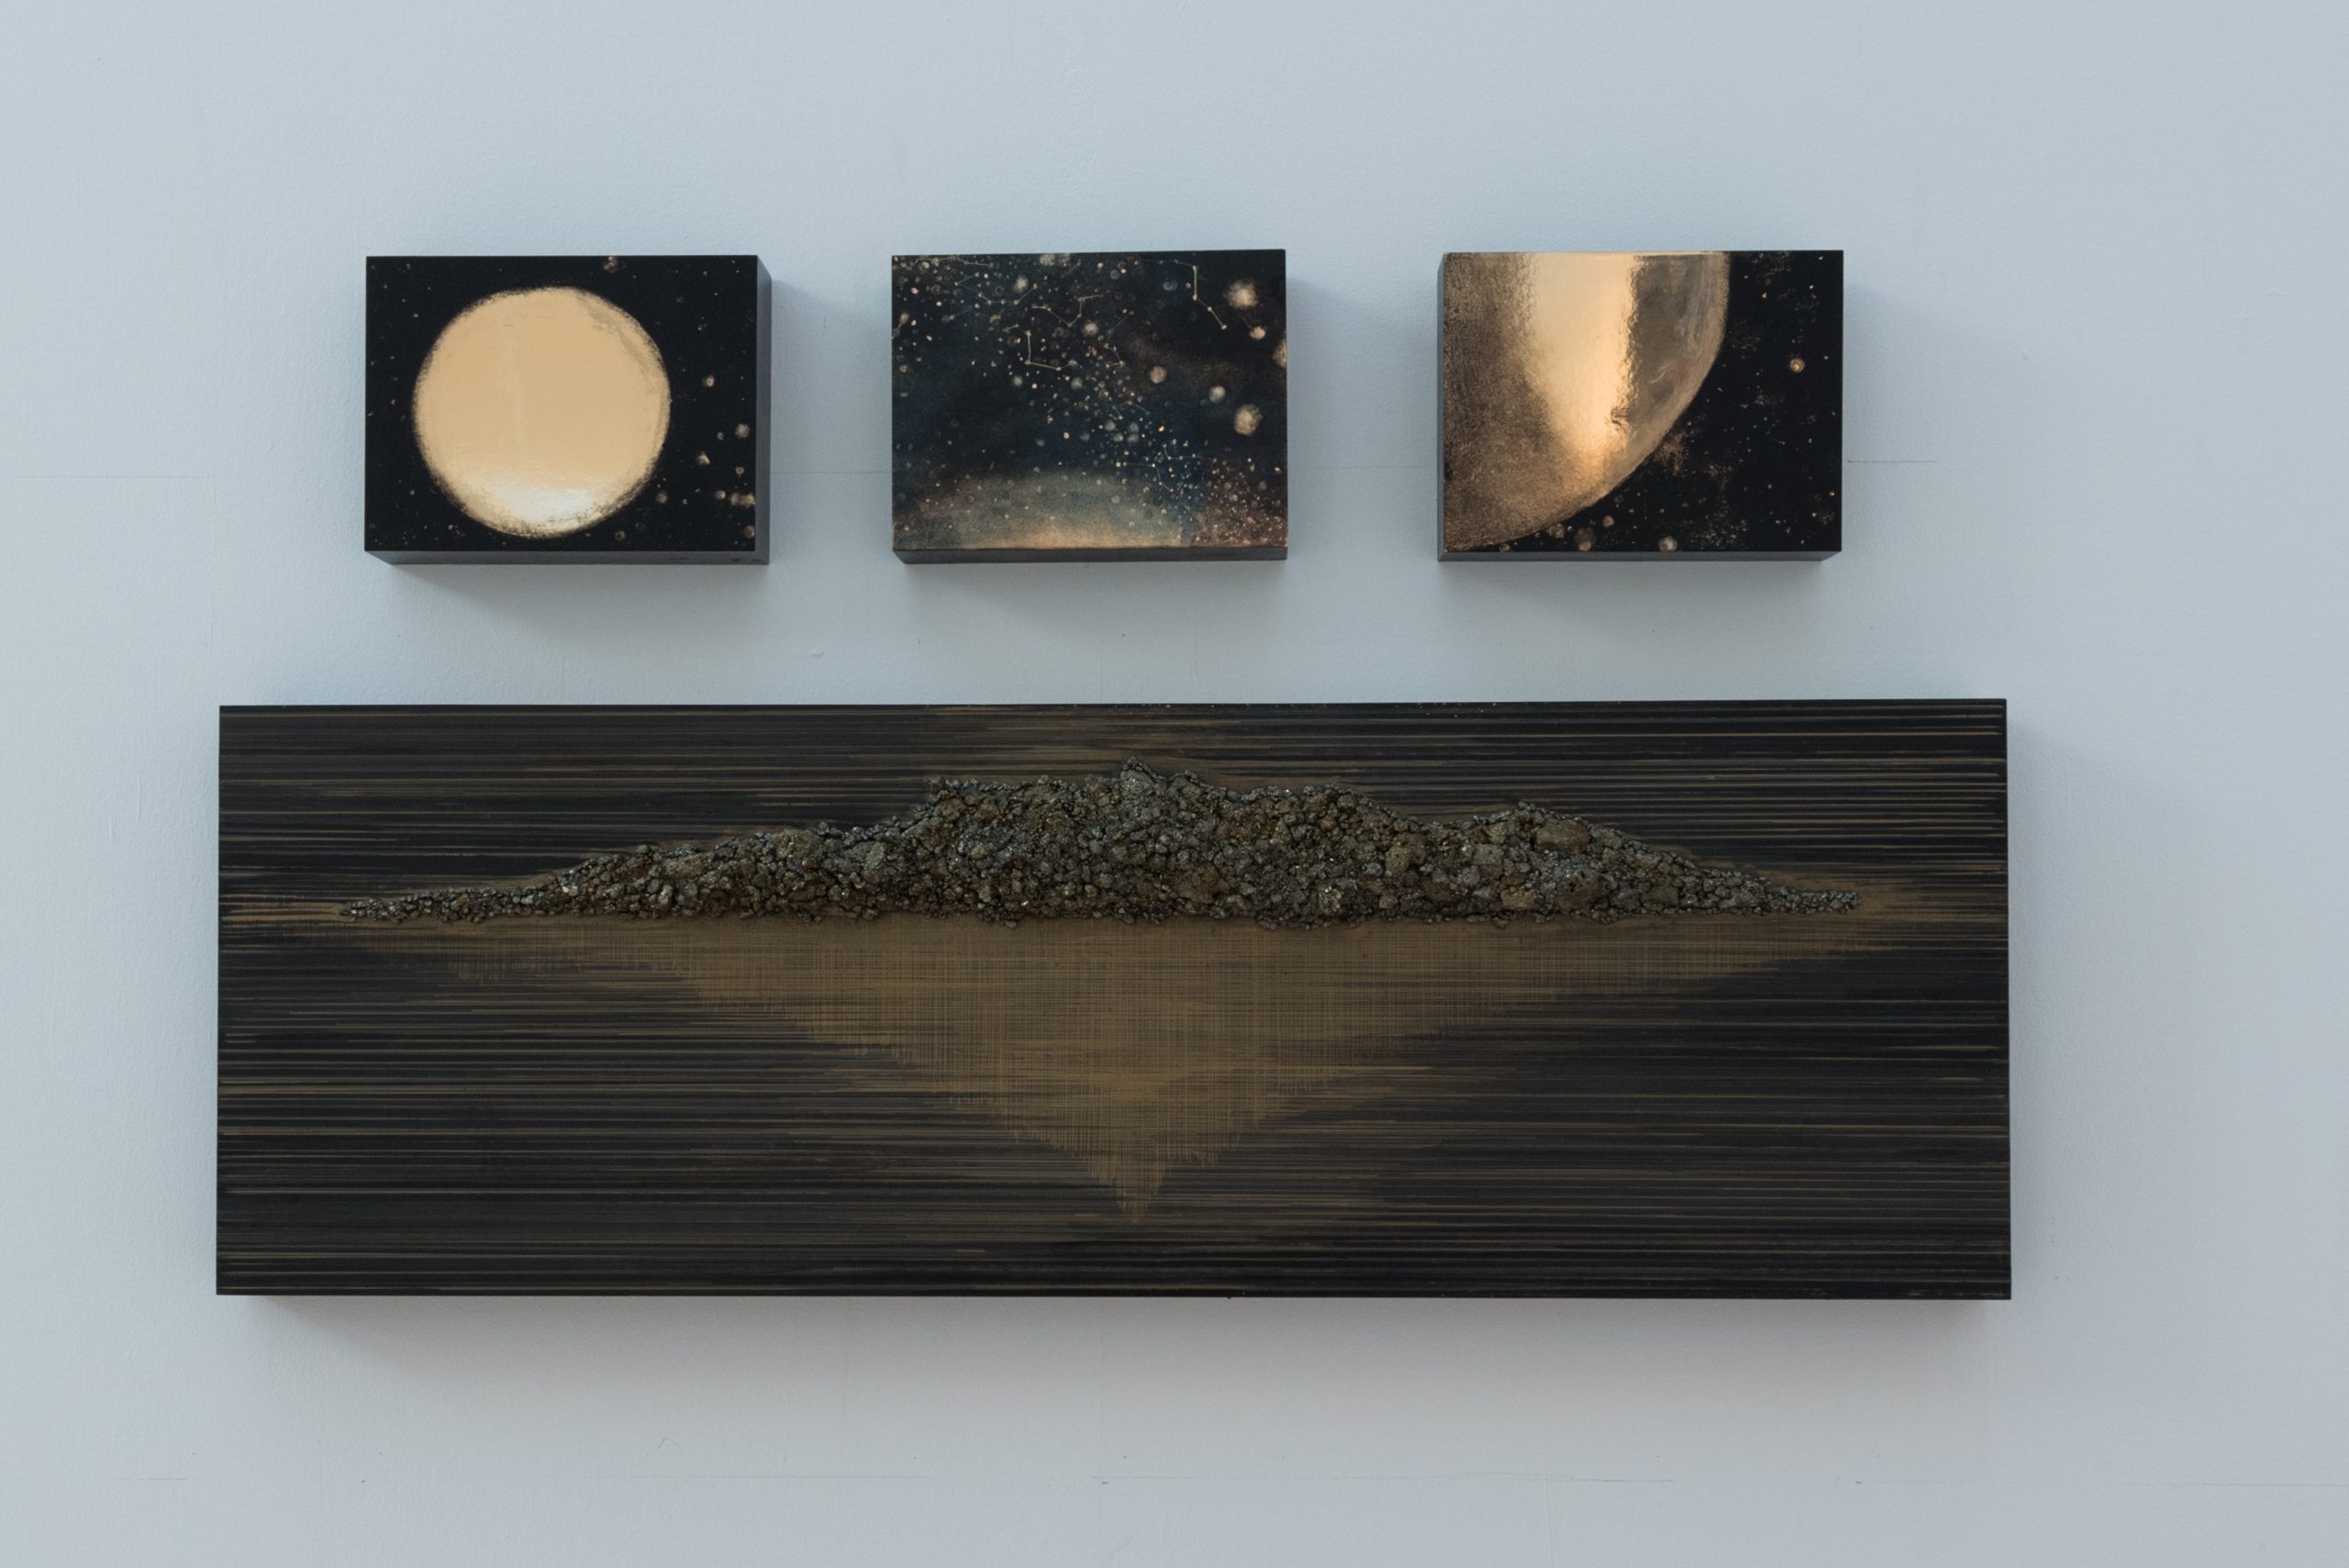 Teresita Fernández, Aponte (Láminas 10-11), 2017, pyrite, oil, graphite on wood panel, 21.5 x 36 x 2 inches overall. Courtesy of the Artist and Lehmann Maupin, New York; photograph by Yolanda Navas.